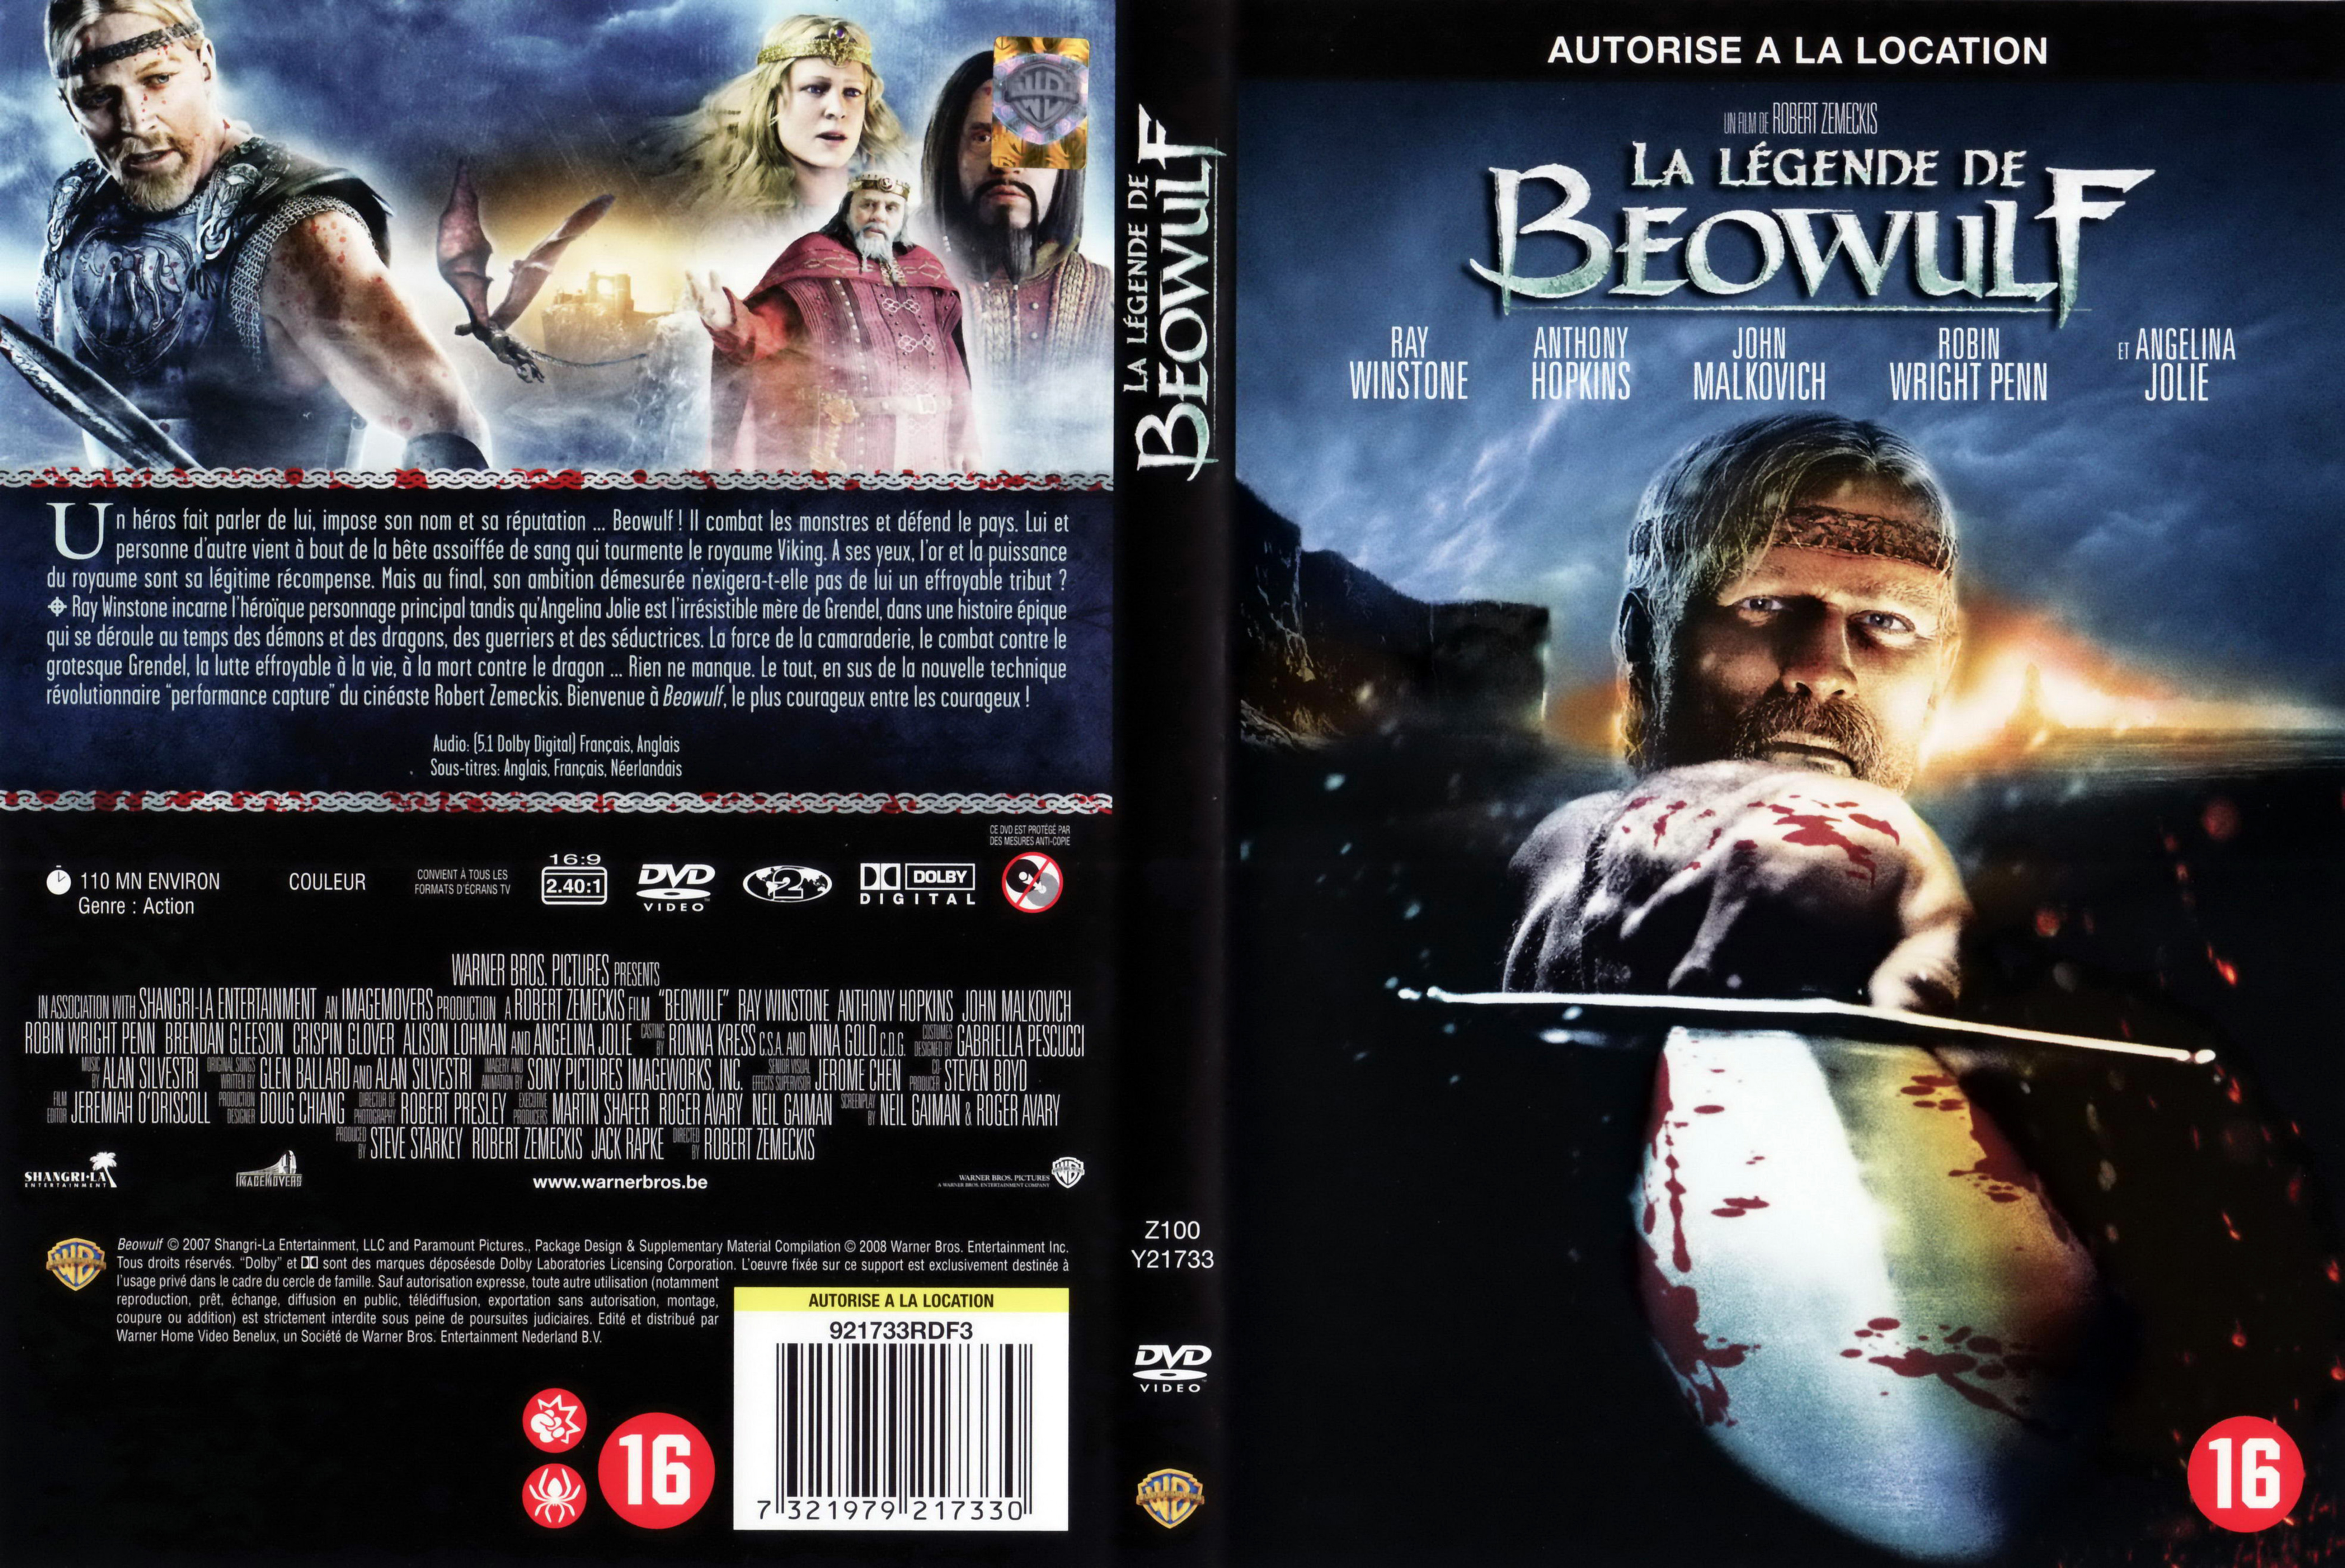 Jaquette DVD La lgende de Beowulf